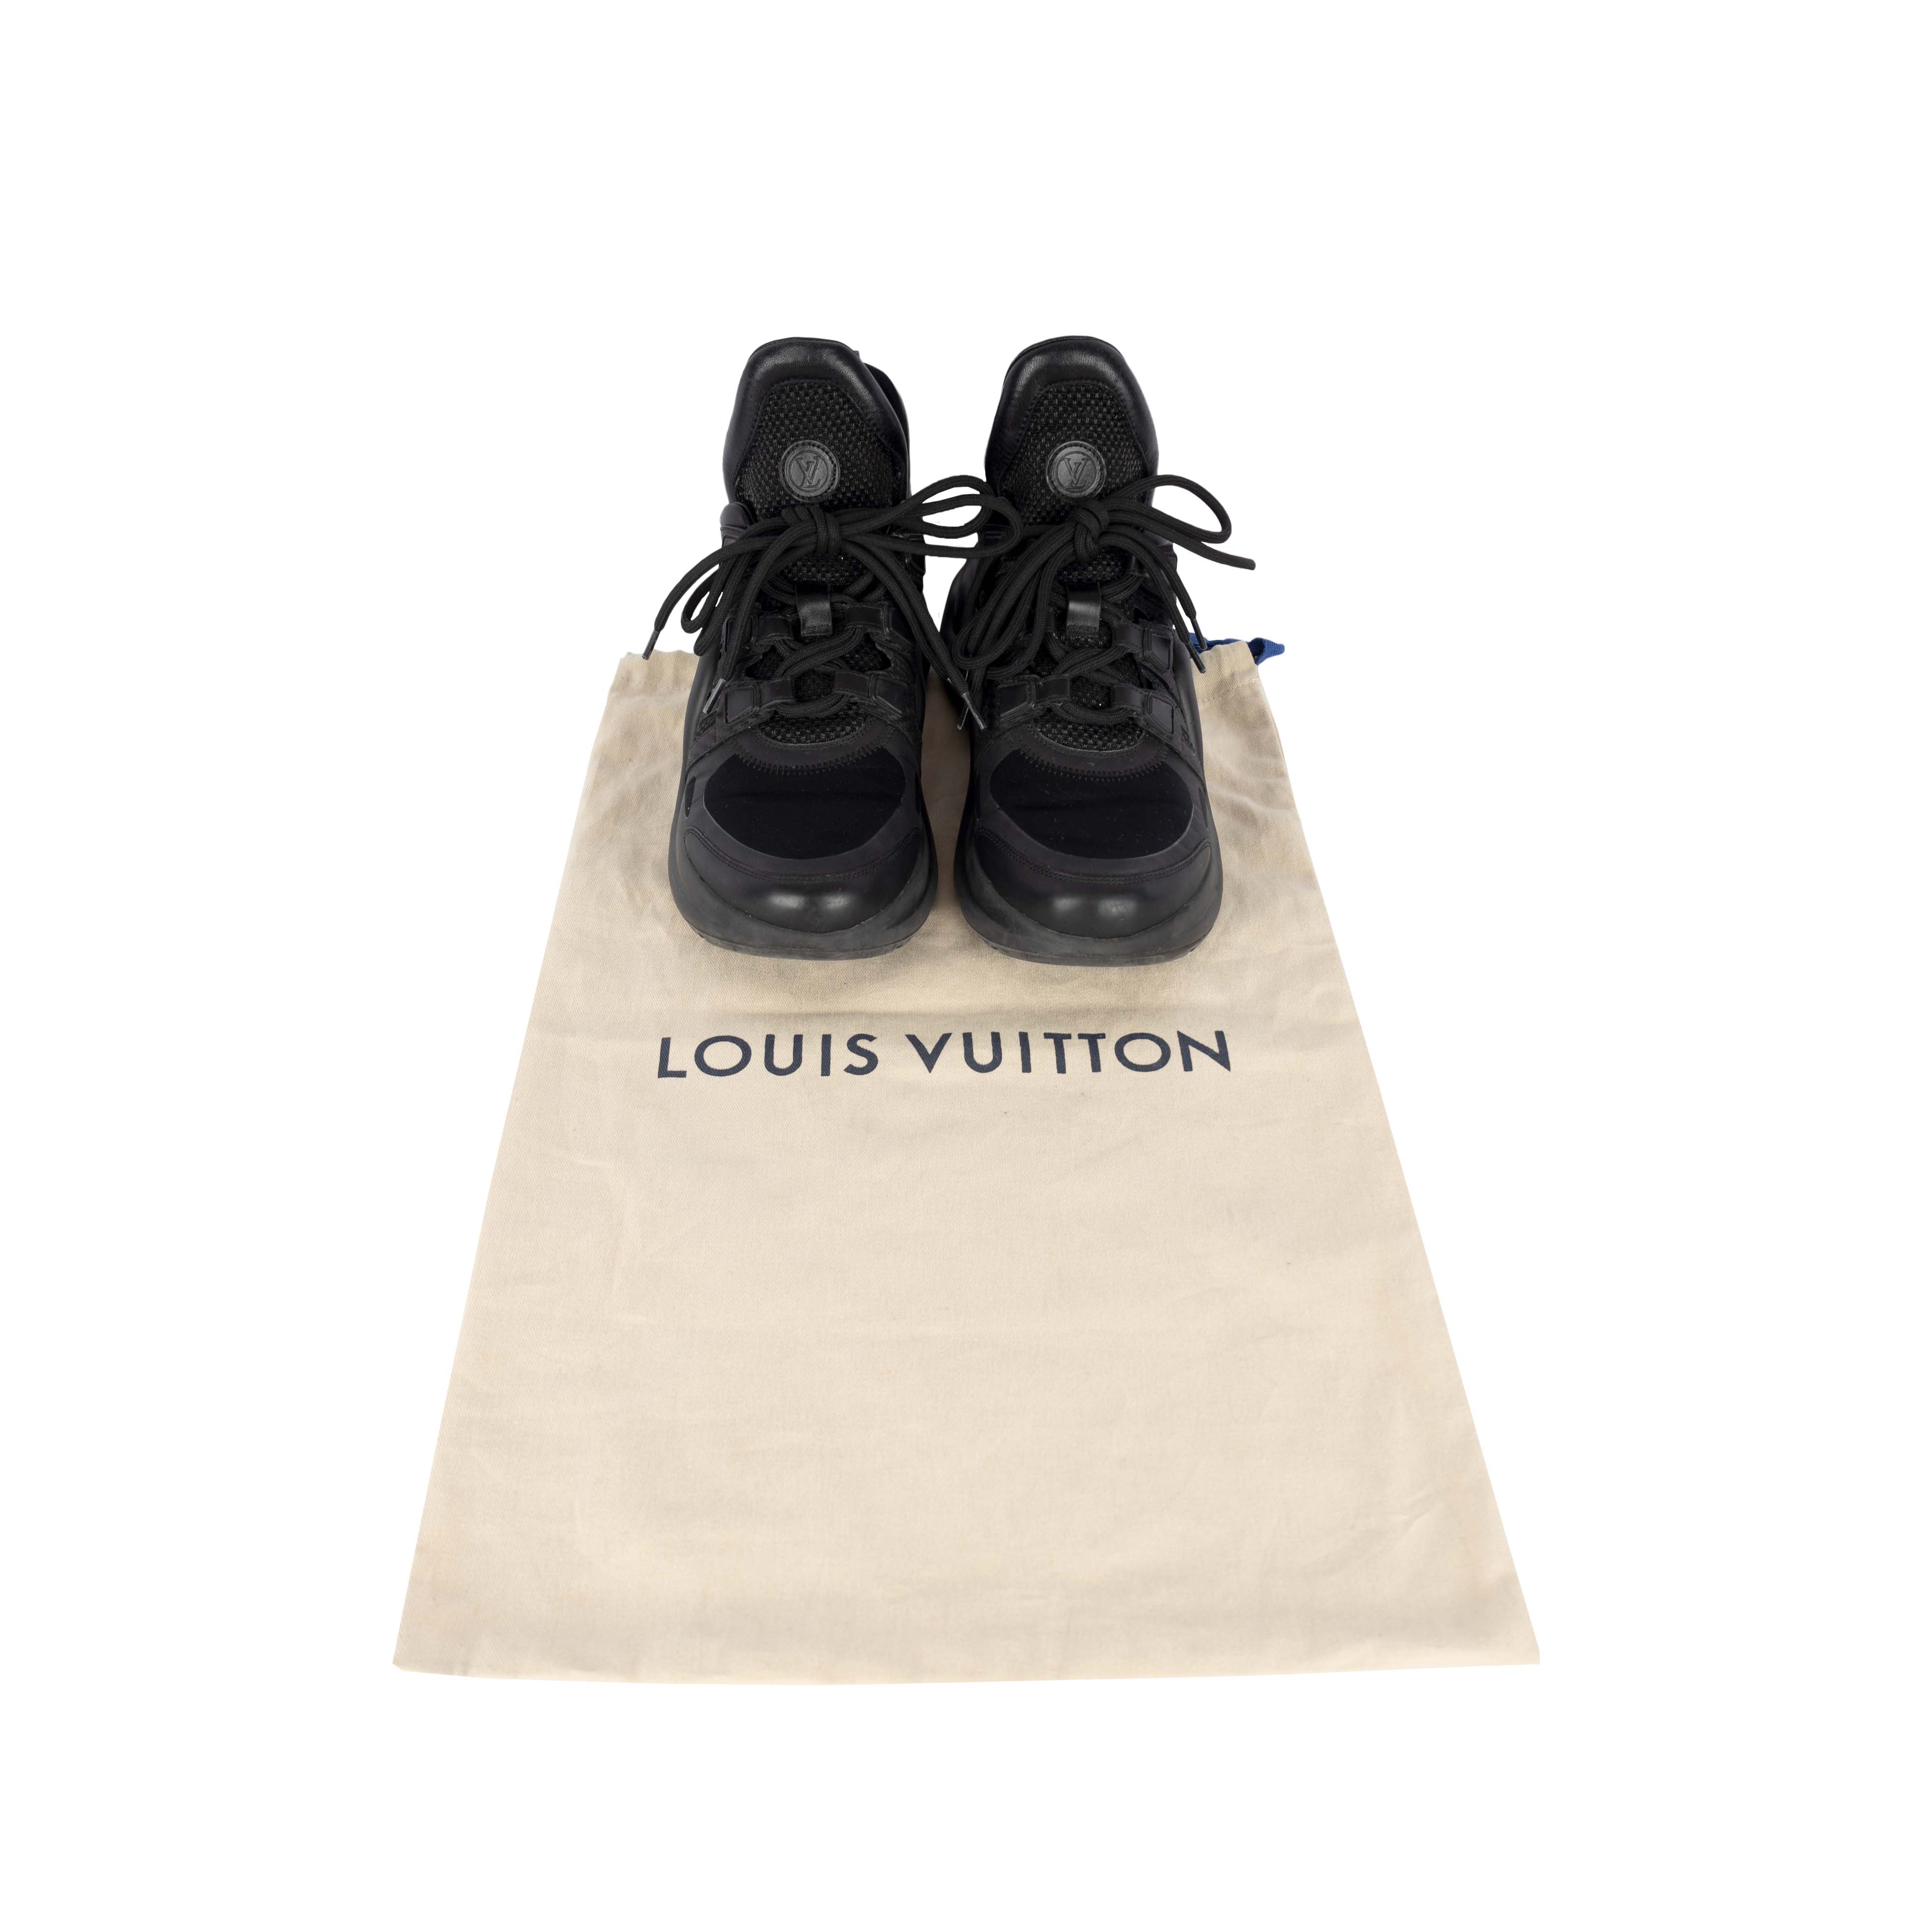 LOUIS VUITTON, Archlight, sneakers, size 39. Vintage Clothing & Accessories  - Auctionet